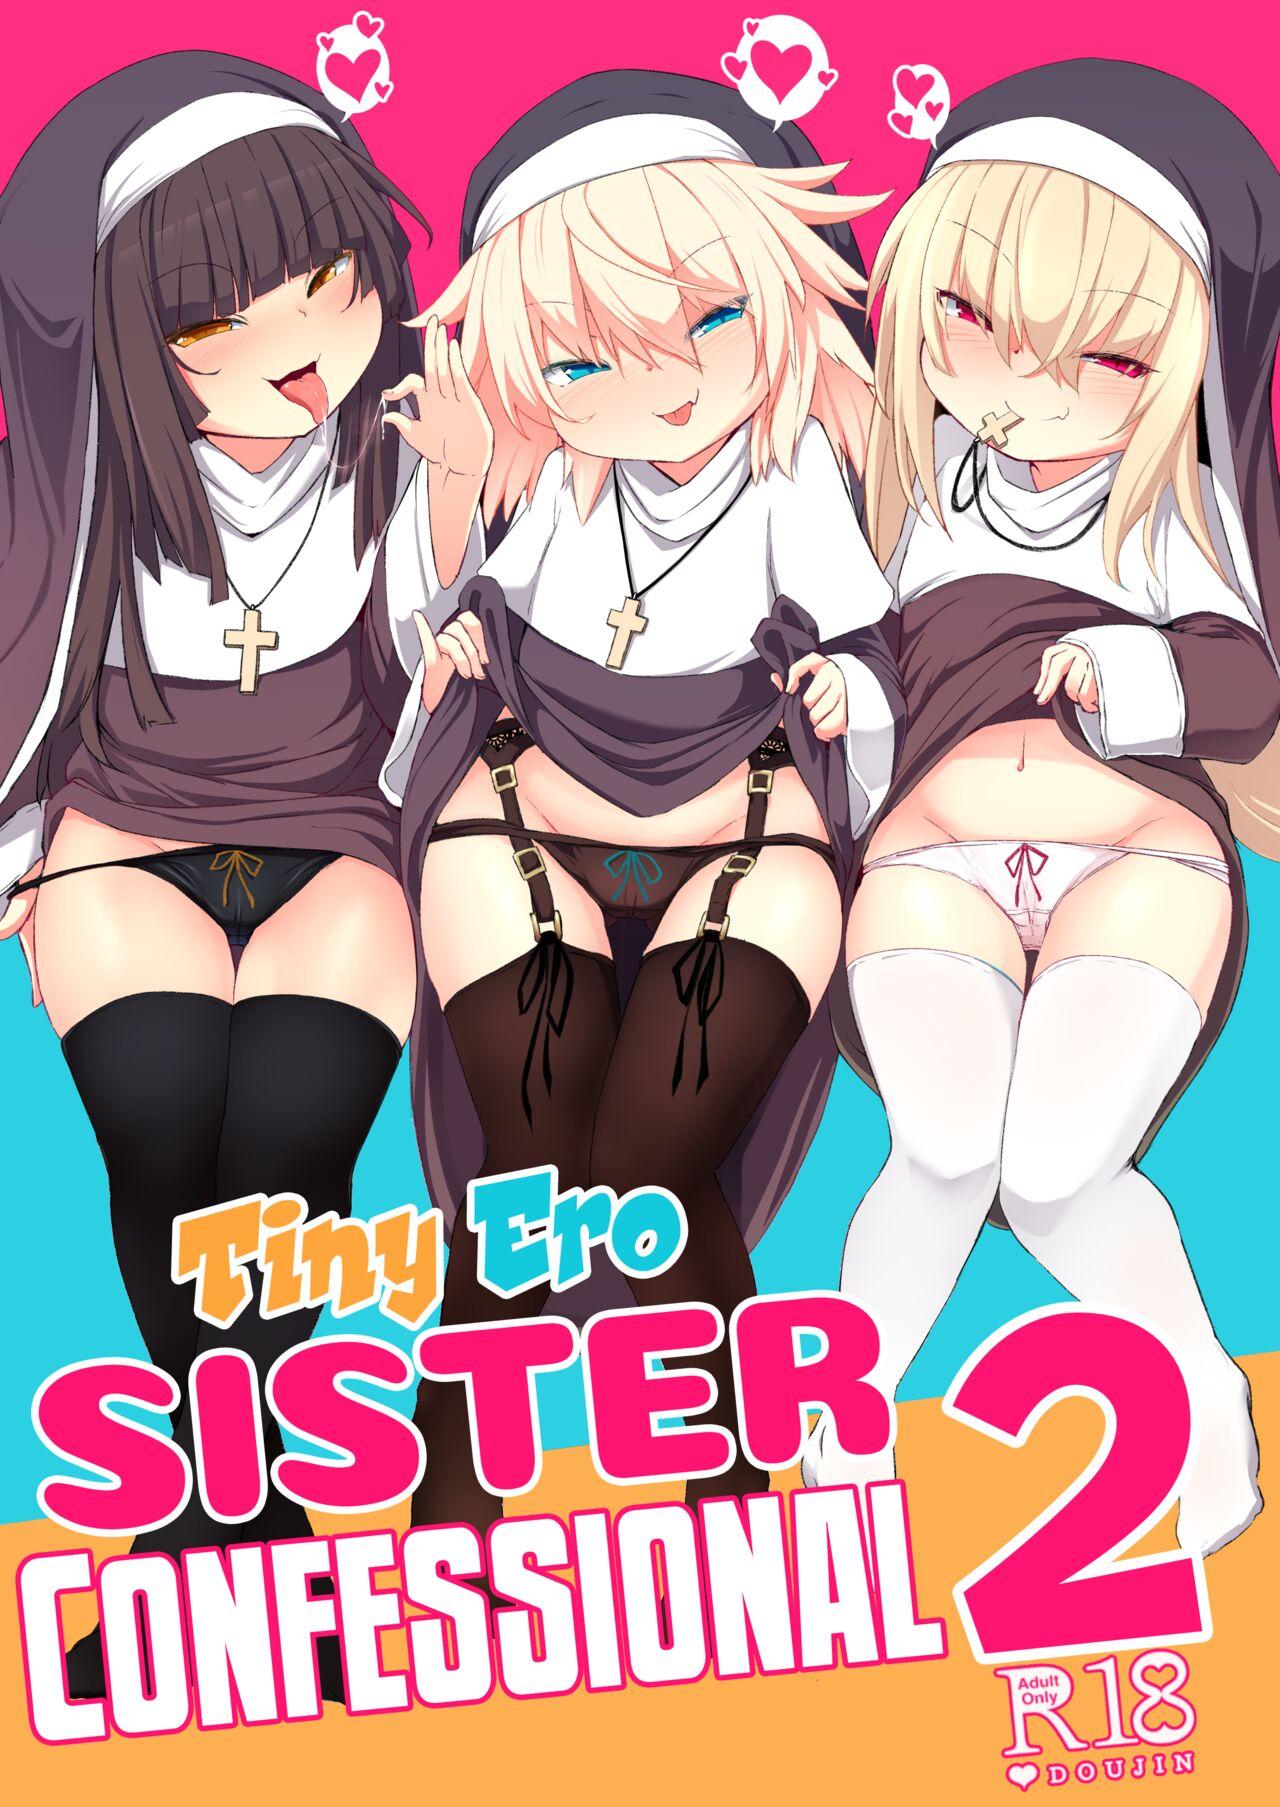 Zangeshitsu no Chiisana Ero Sister 2 | Tiny Ero Sister Confessional 2 0